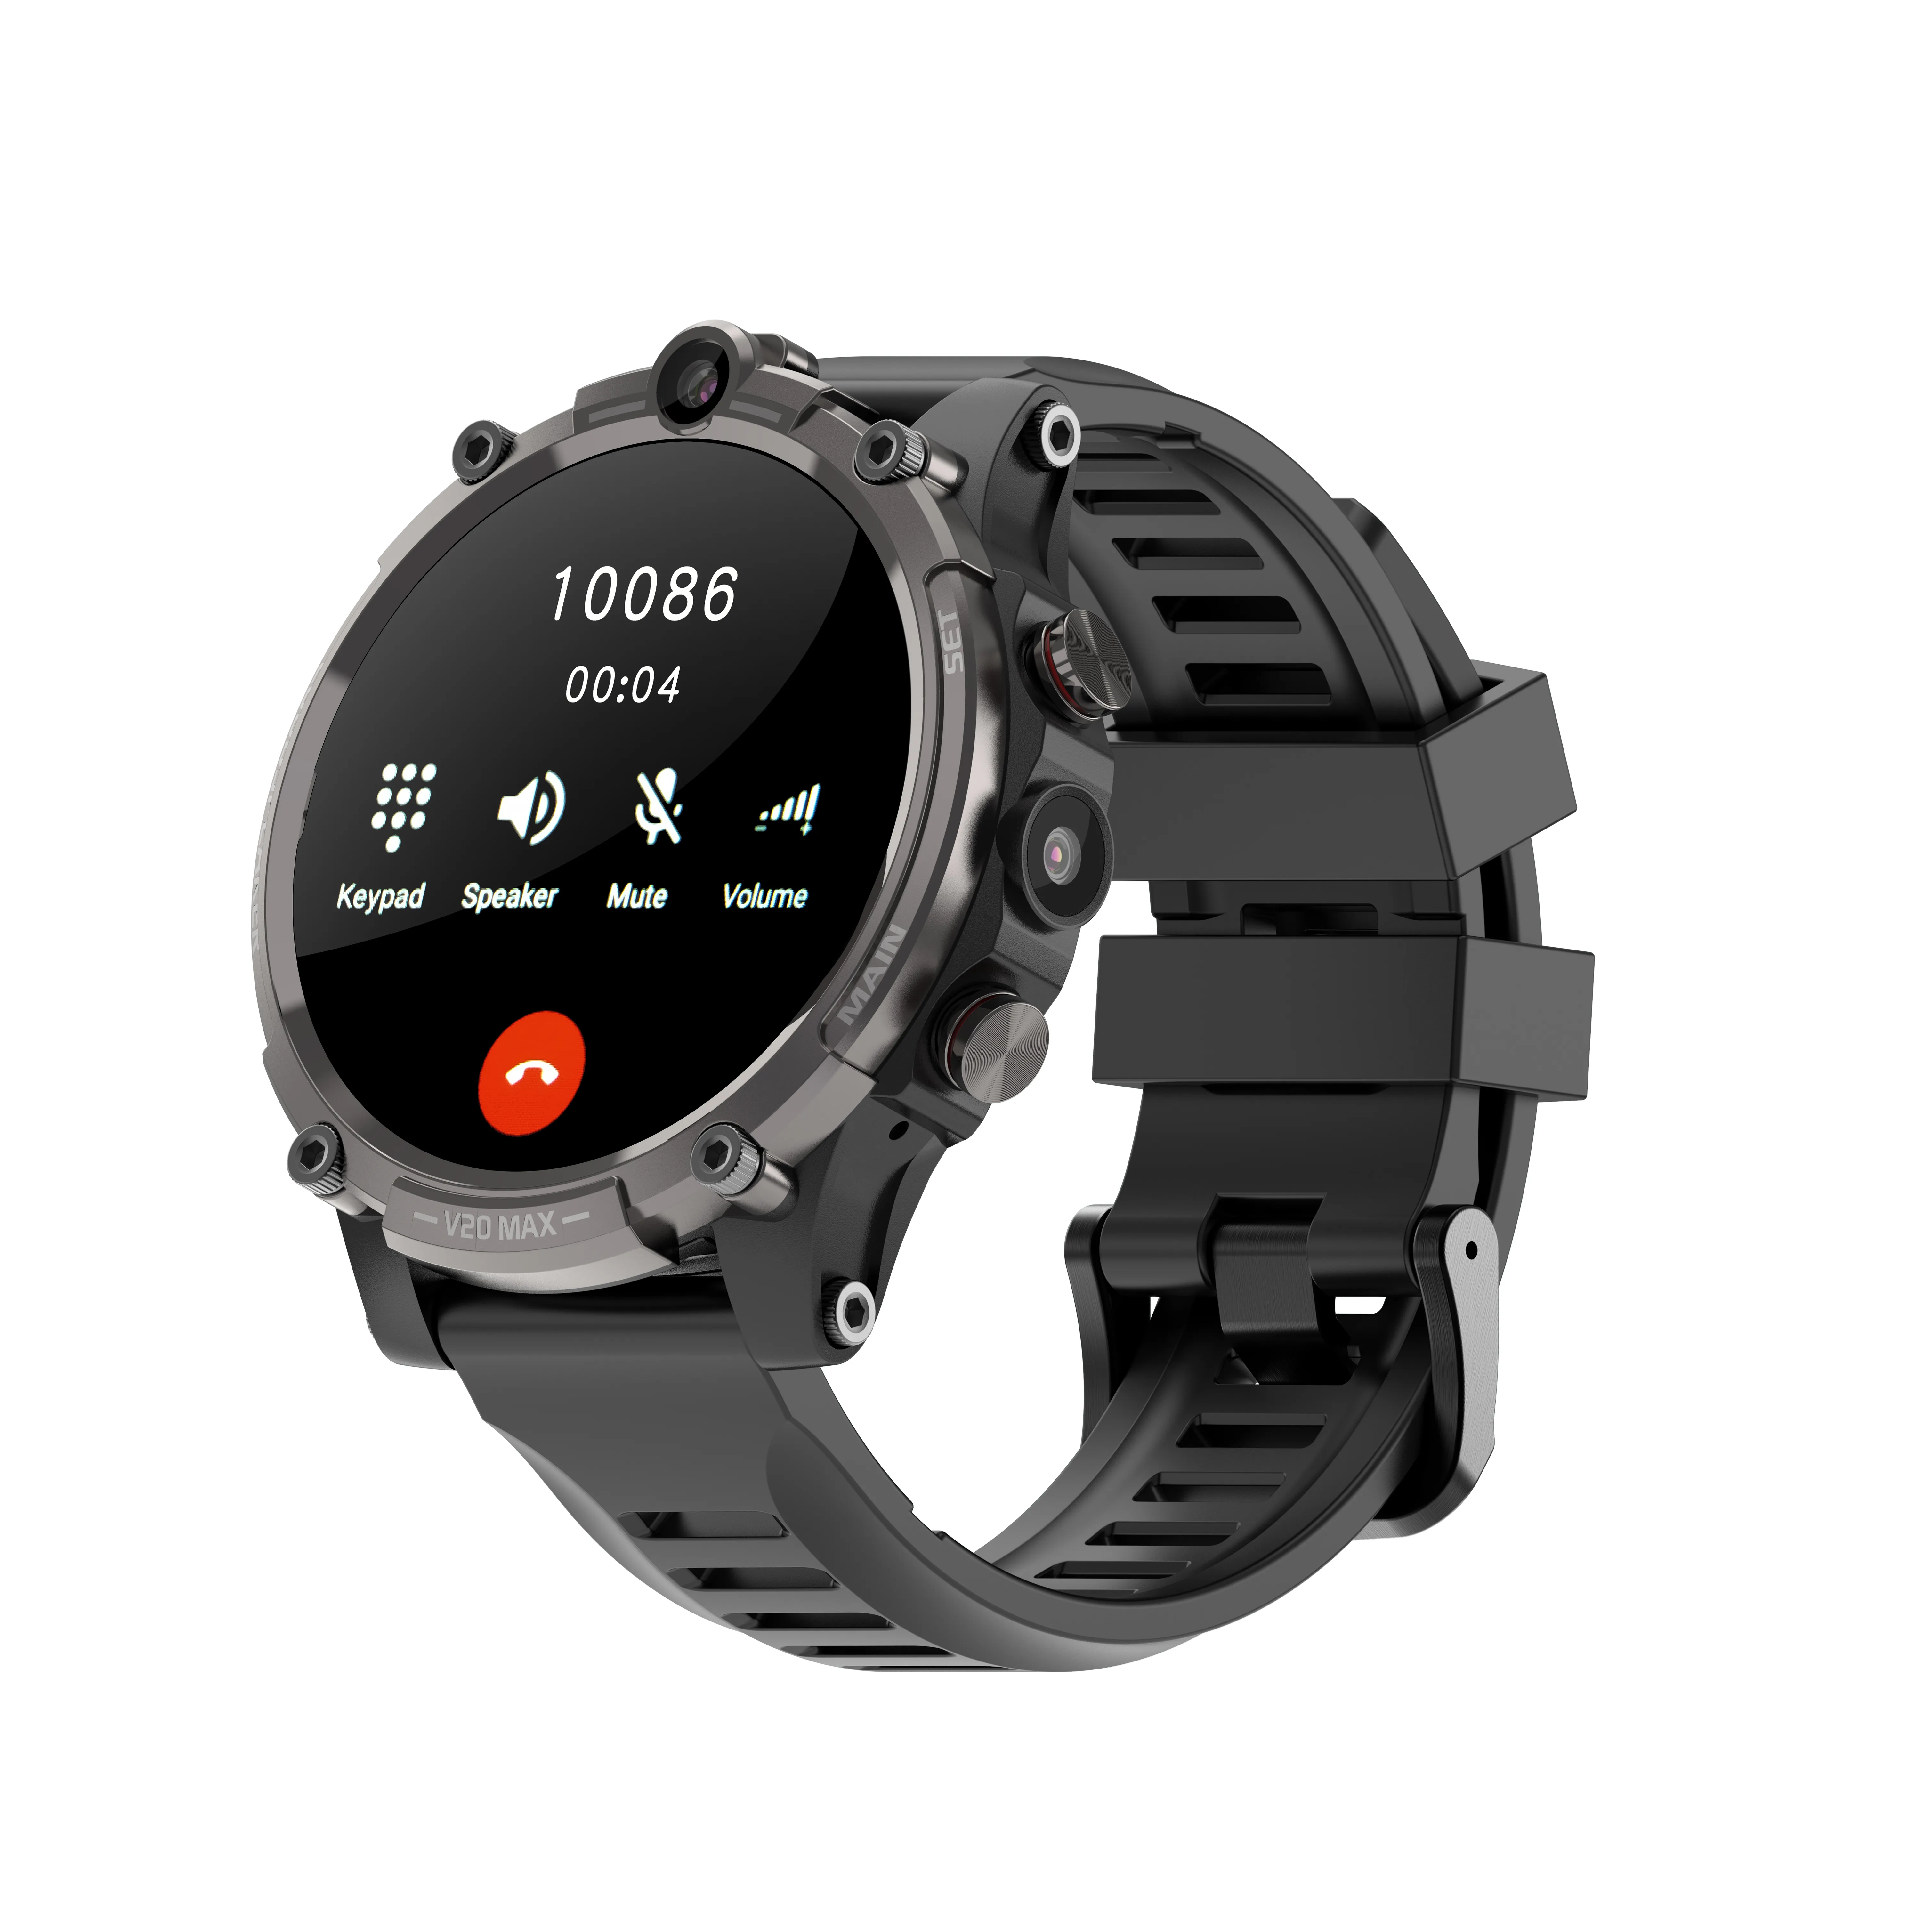 4G LTE Сотовые телефоны SIM -карта Smart Watch Fitness Tracker Sports IP68 Водонепроницаемые сердечные ритмы Грузы GPS Smart Wwatch IOS Android Phone Watches 128 ГБ 2MP -камеры